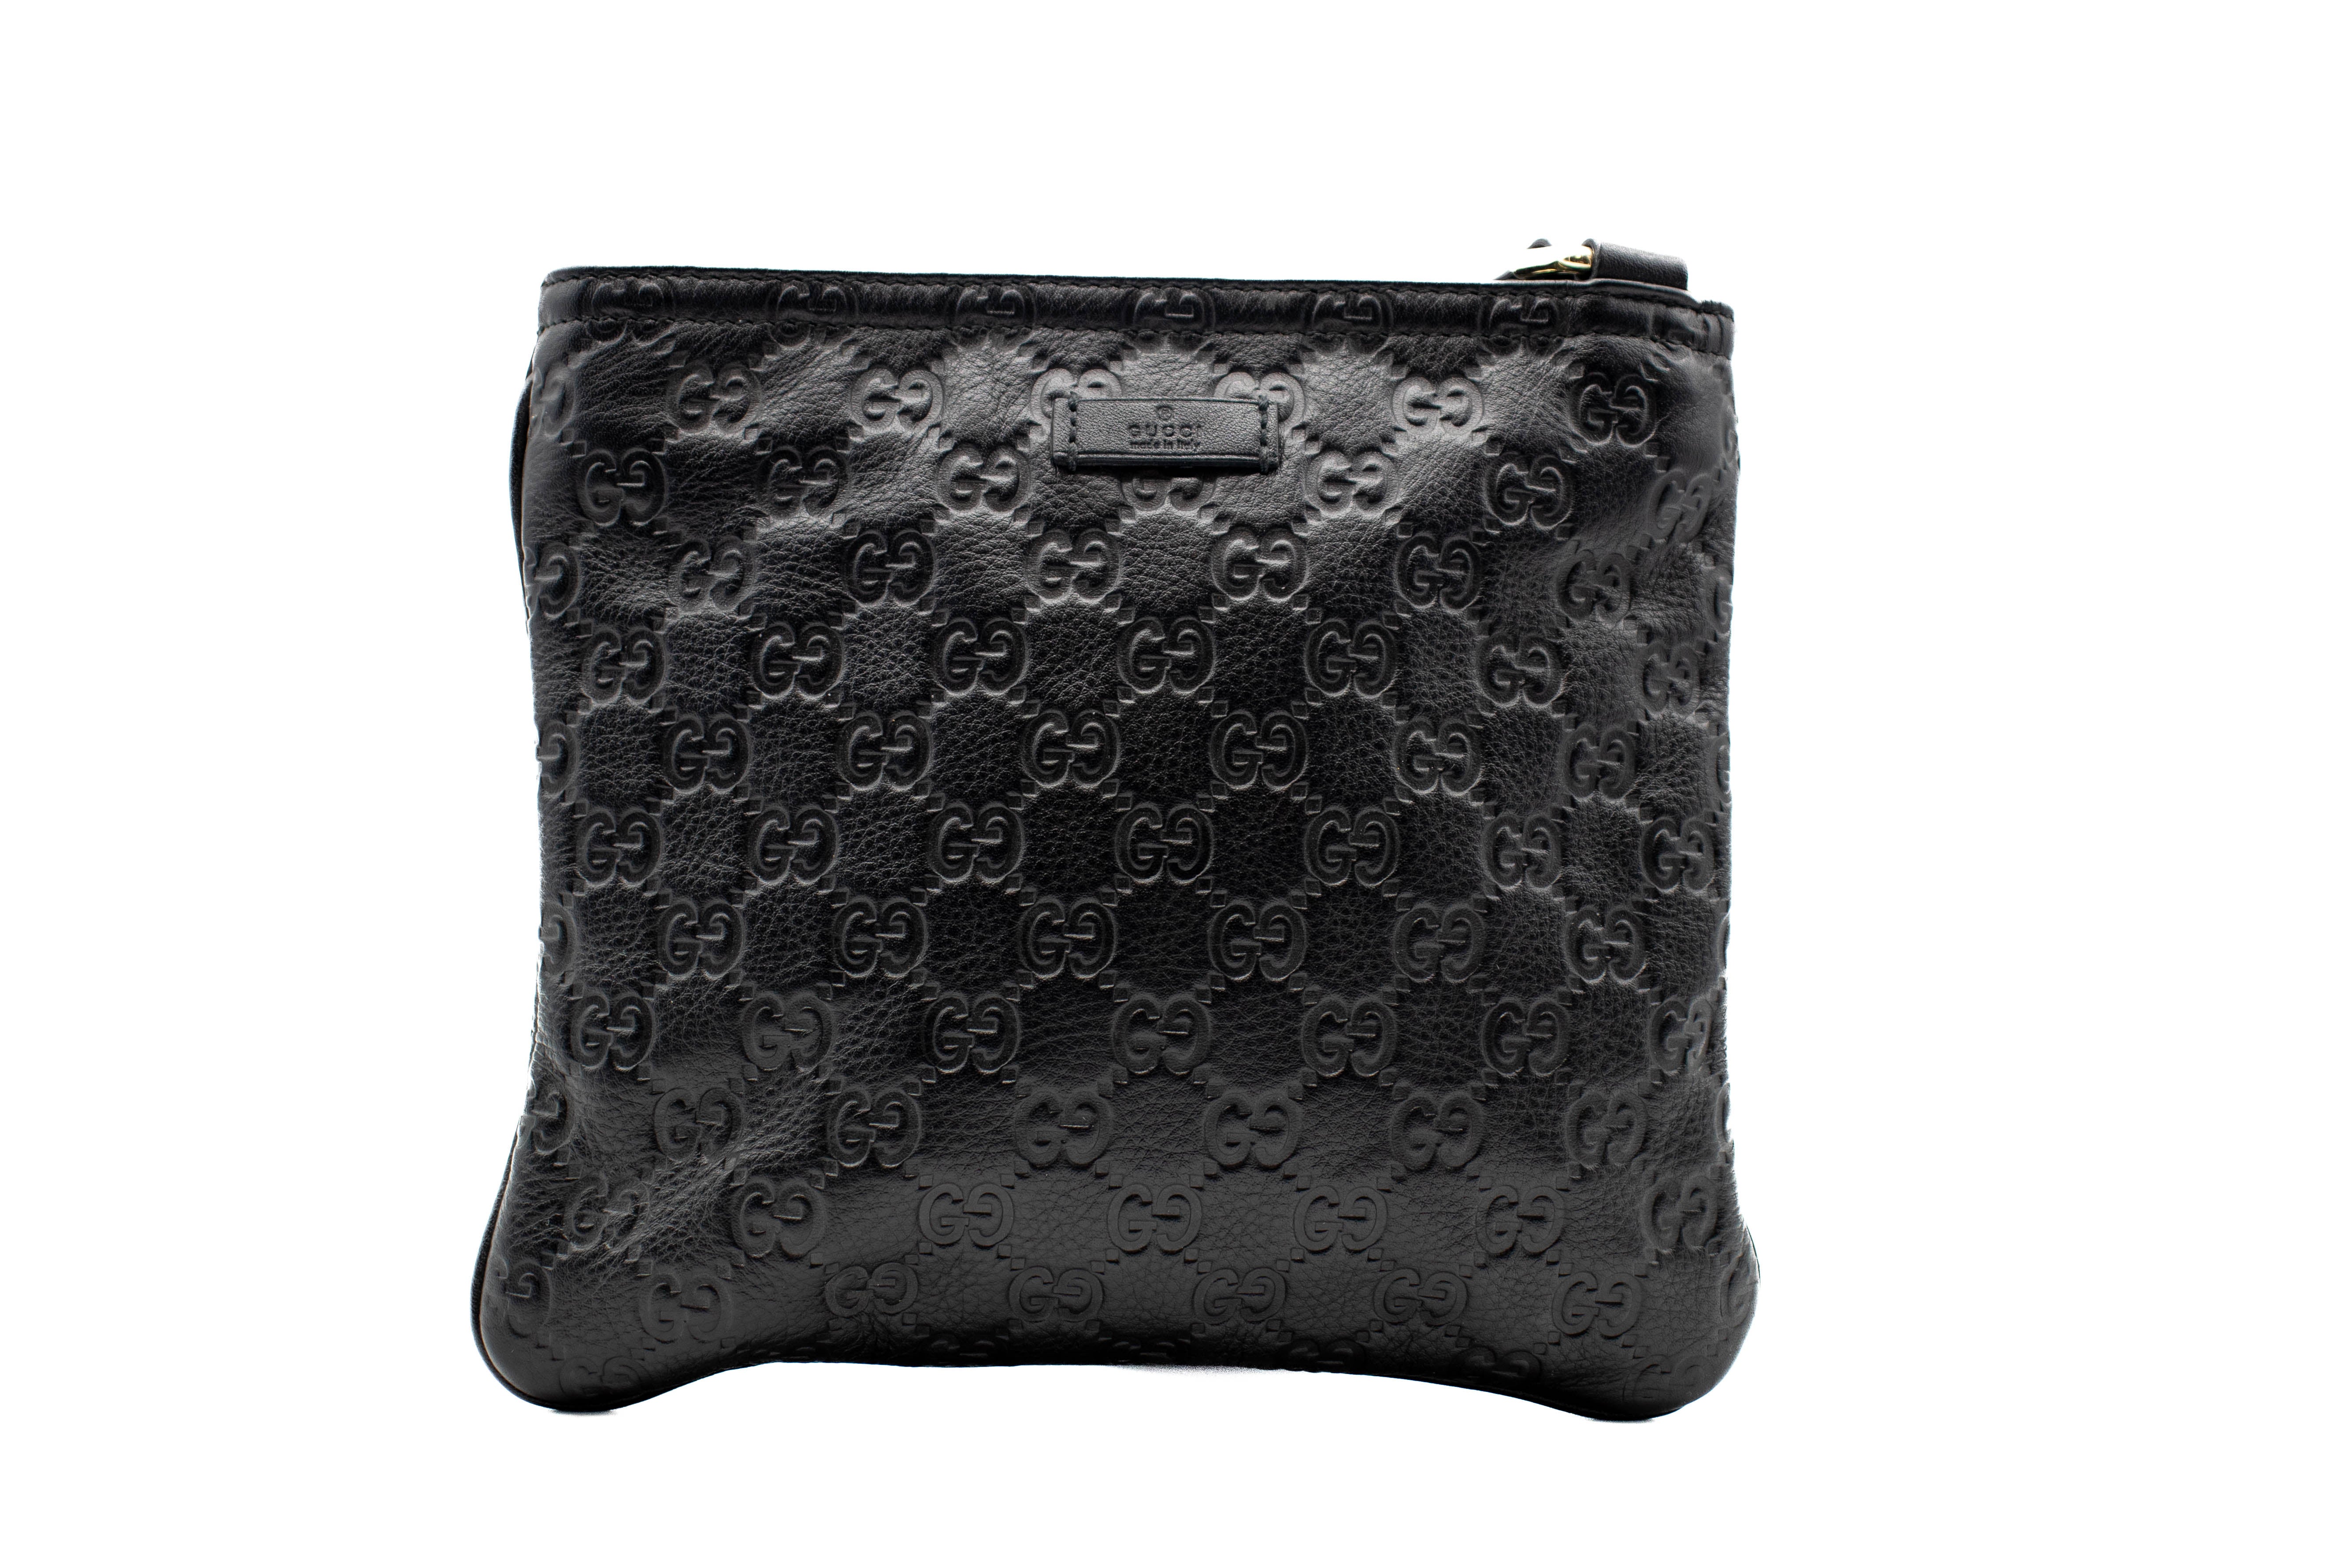 Gucci "GG" Monogram Leather Shoulderbag